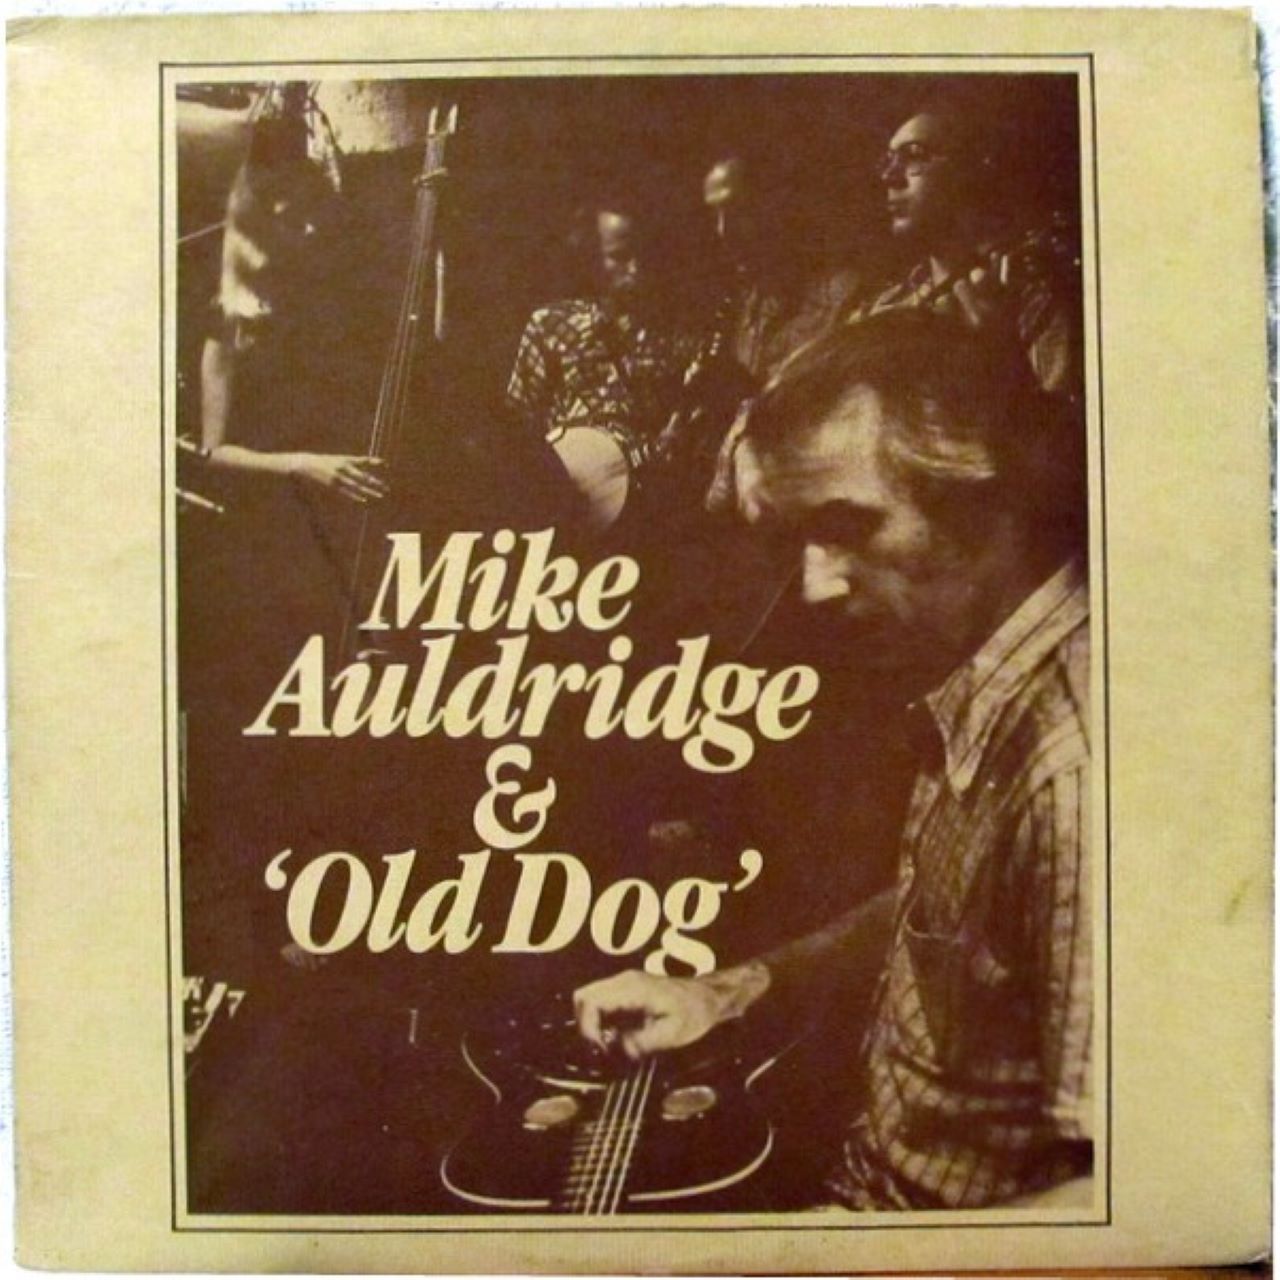 Mike Auldridge - Old Dog cover album